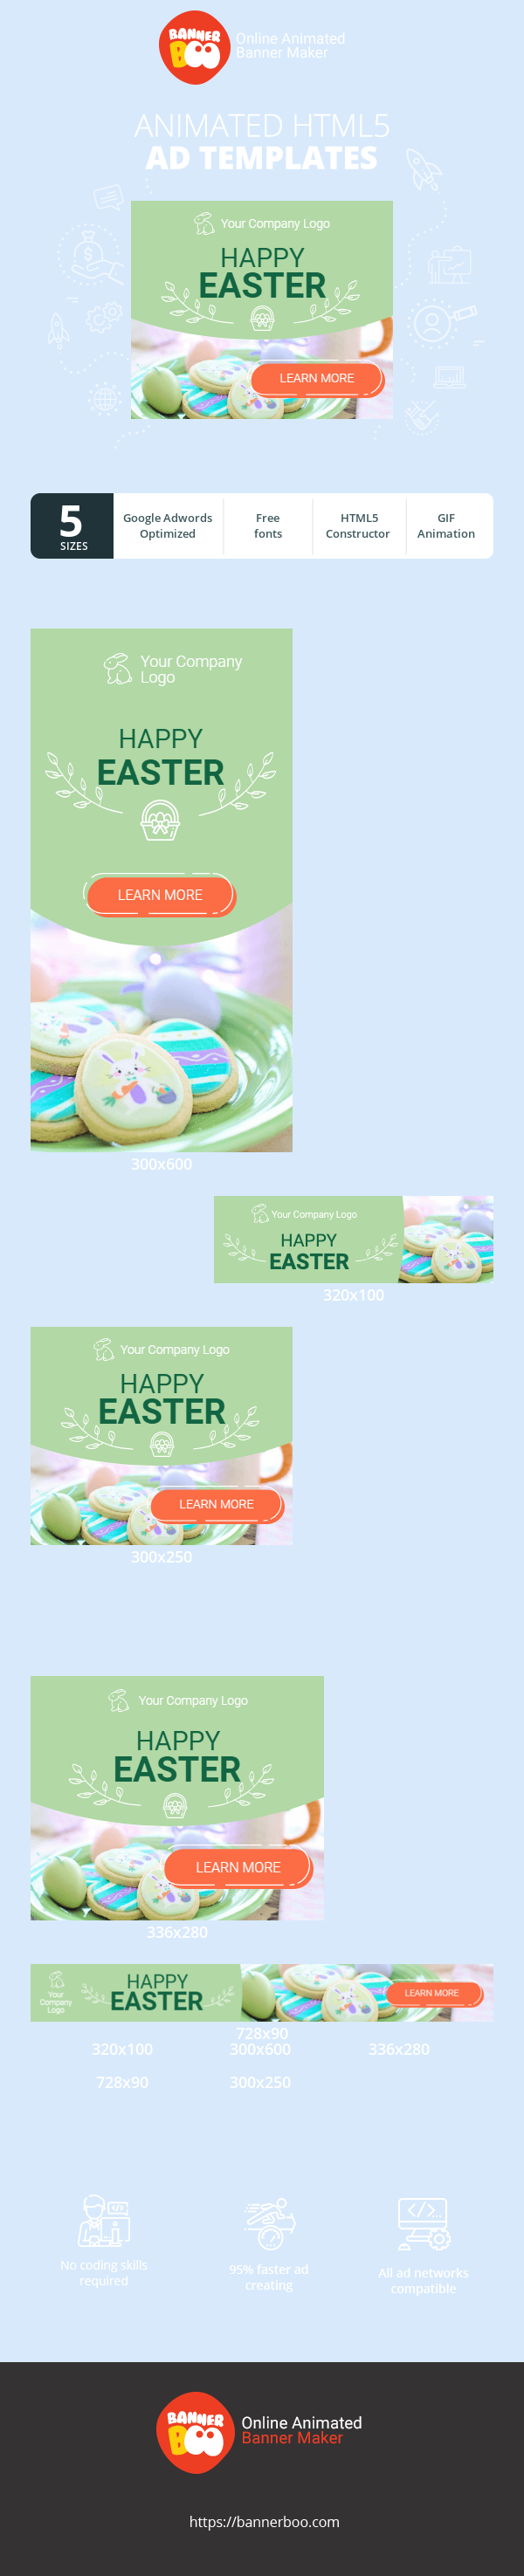 Szablon reklamy banerowej — Happy Easter!